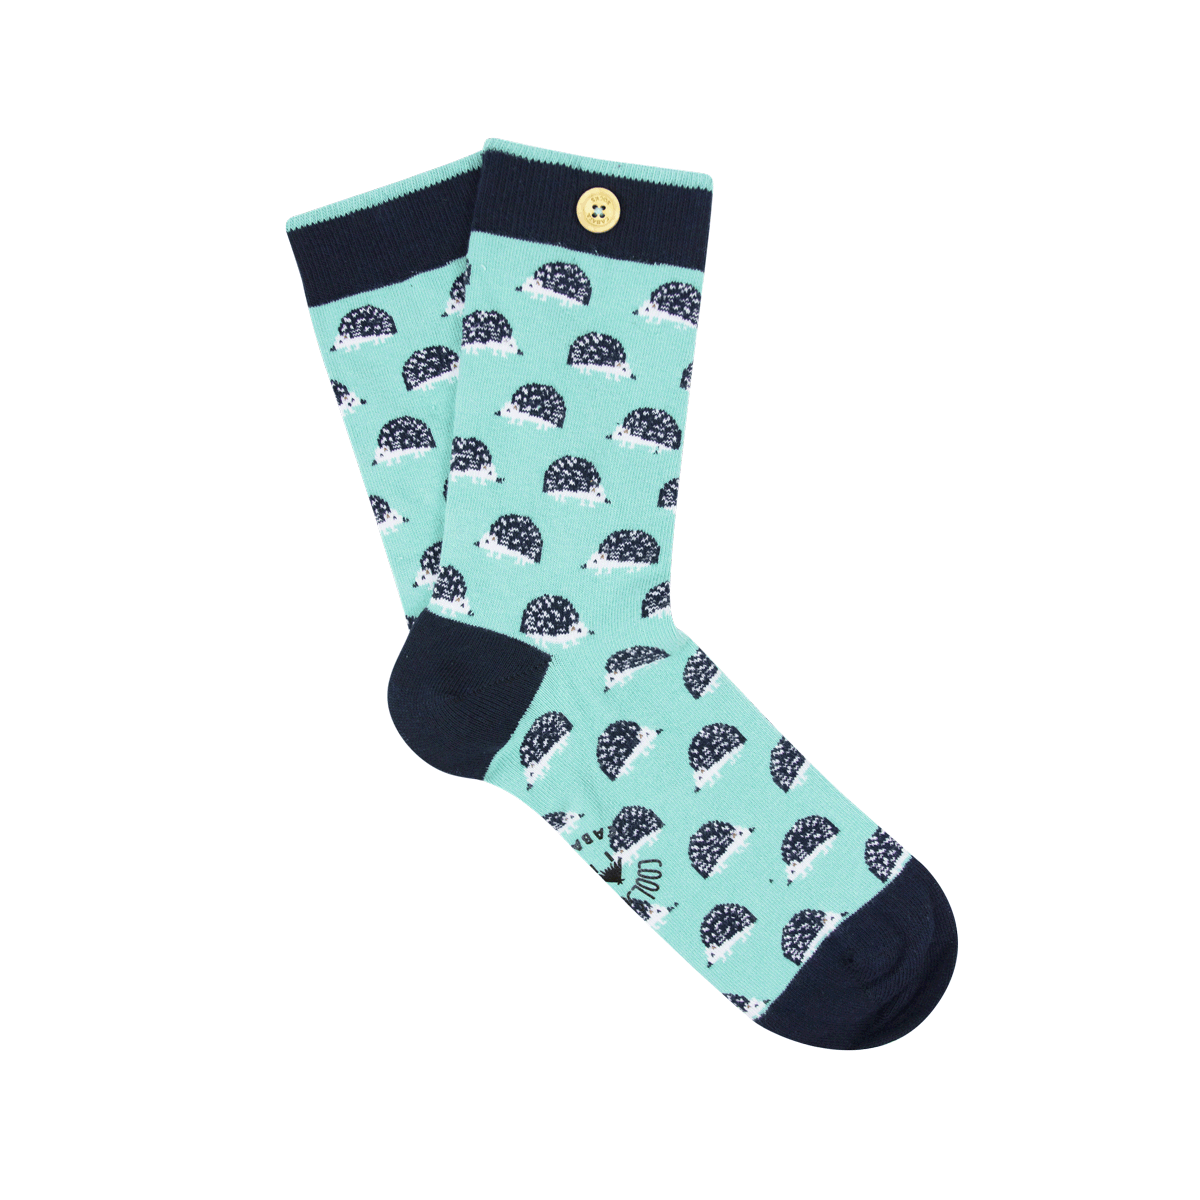 unlosable-socks-wood-button-men-41-46-socks20-adri-sok